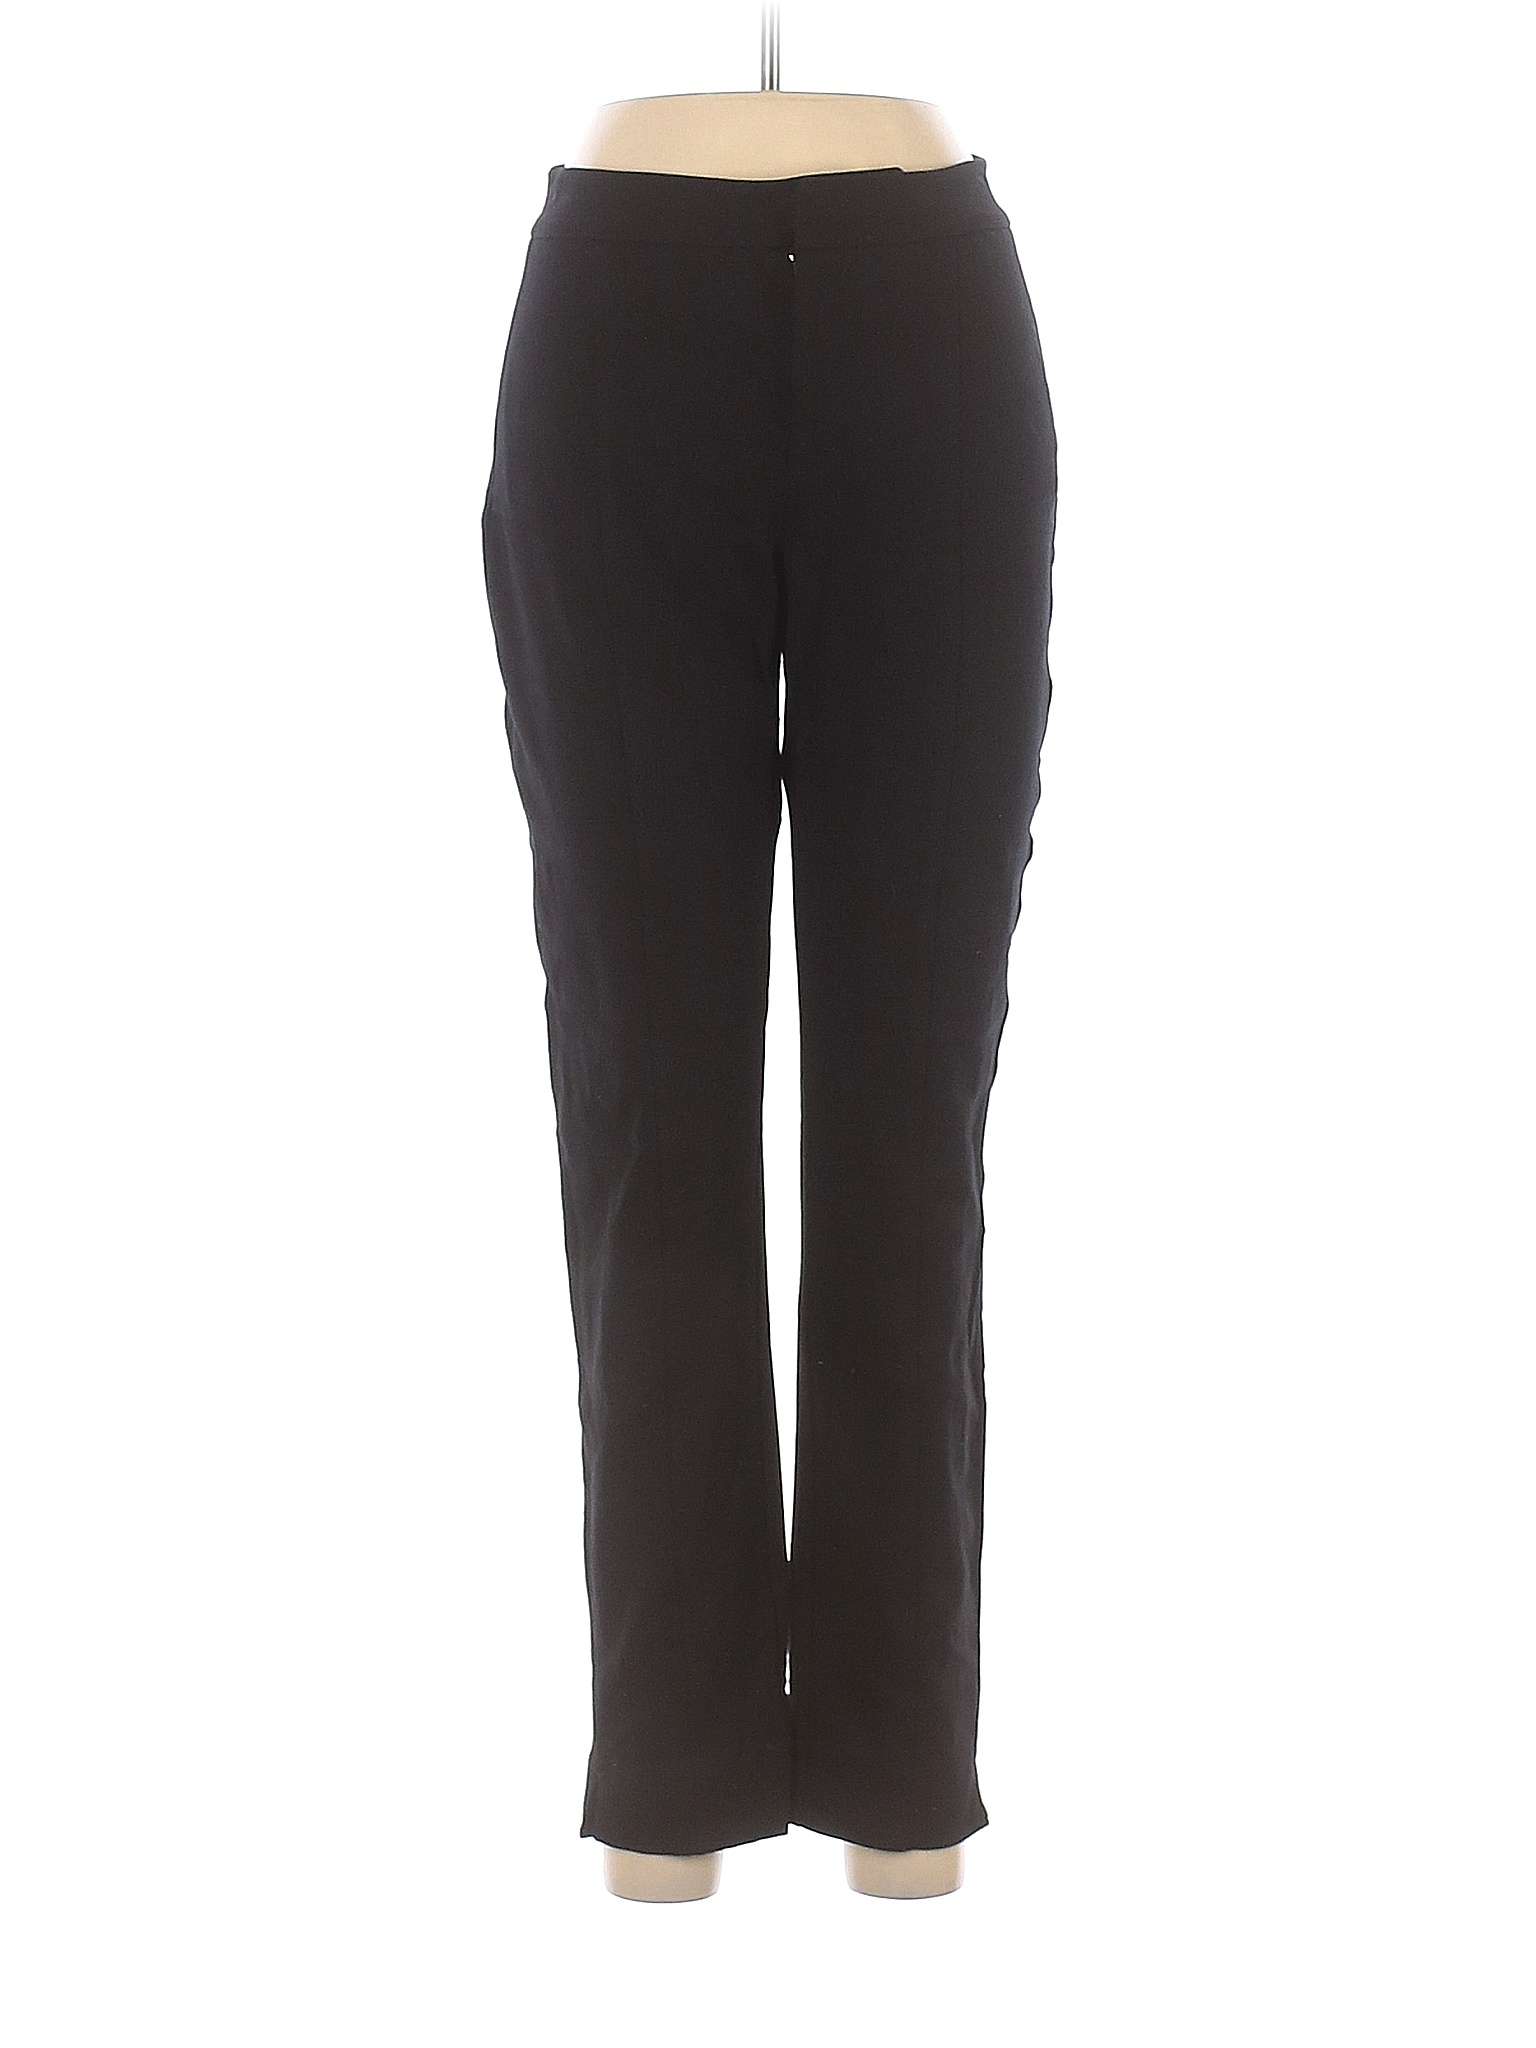 NYDJ Solid Black Casual Pants Size 6 - 90% off | thredUP